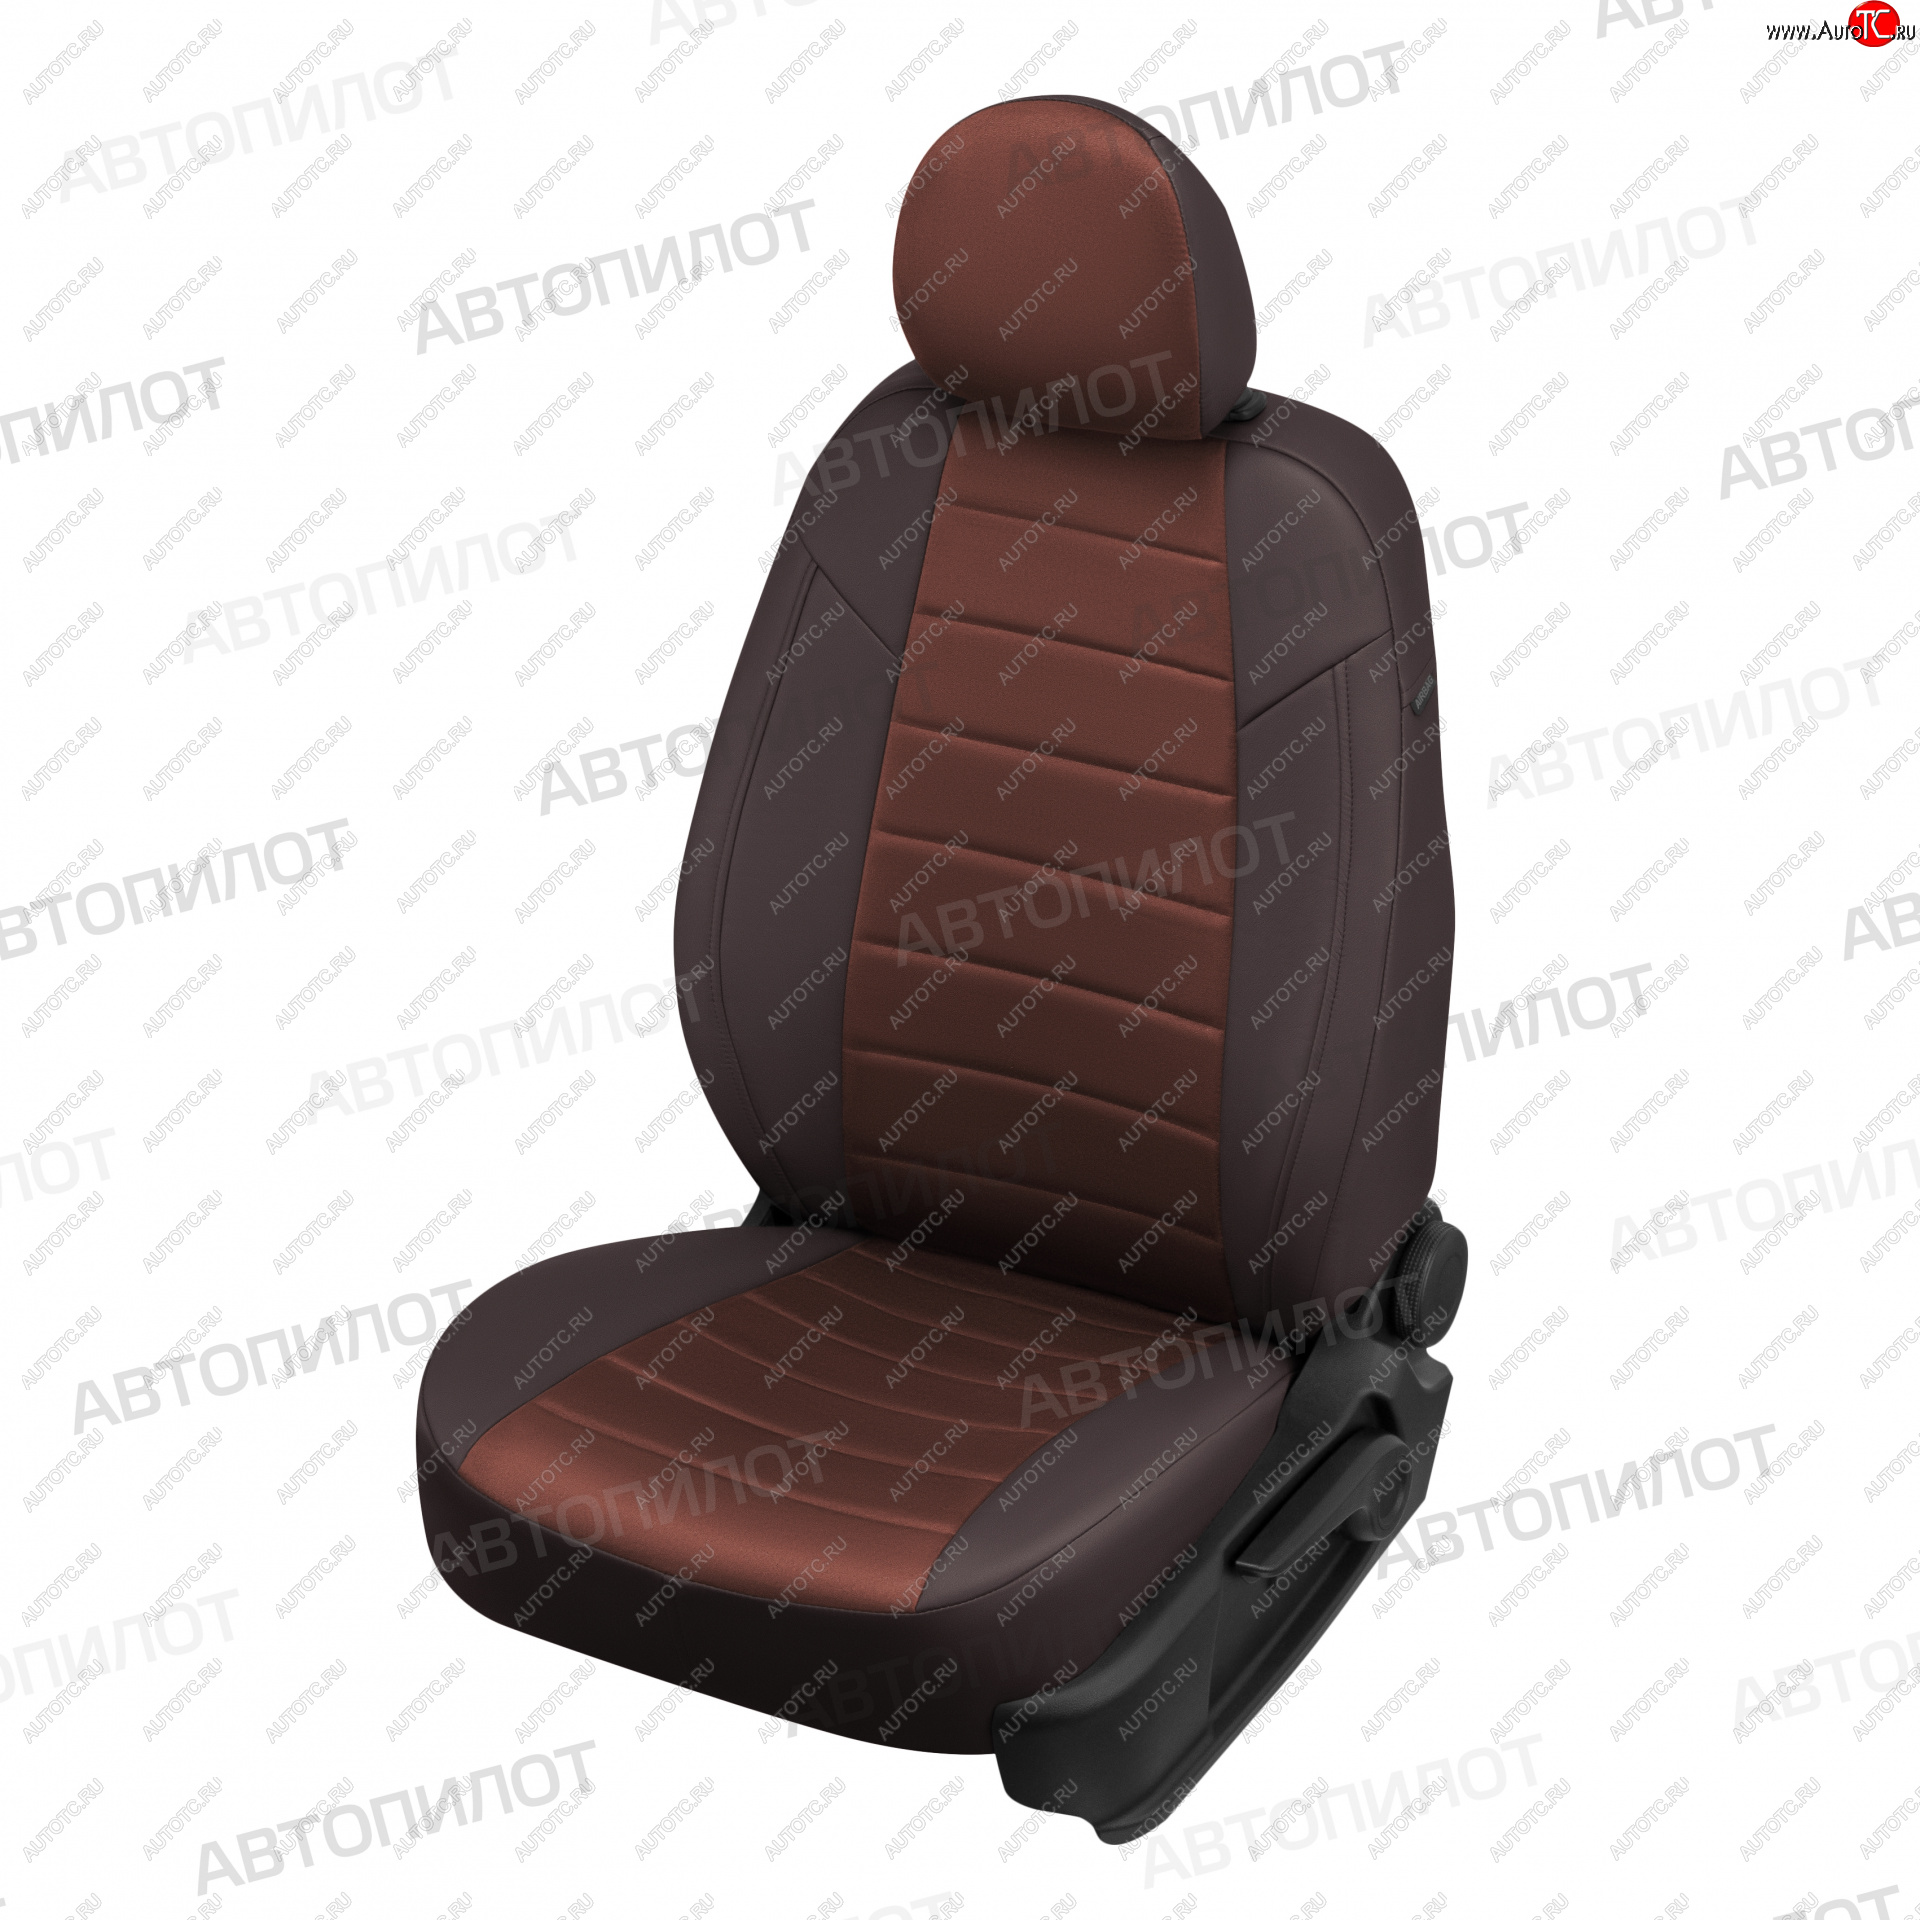 13 849 р. Чехлы сидений (5 мест, экокожа/алькантара) Автопилот  Ford Galaxy  2 (2006-2015) (шоколад)